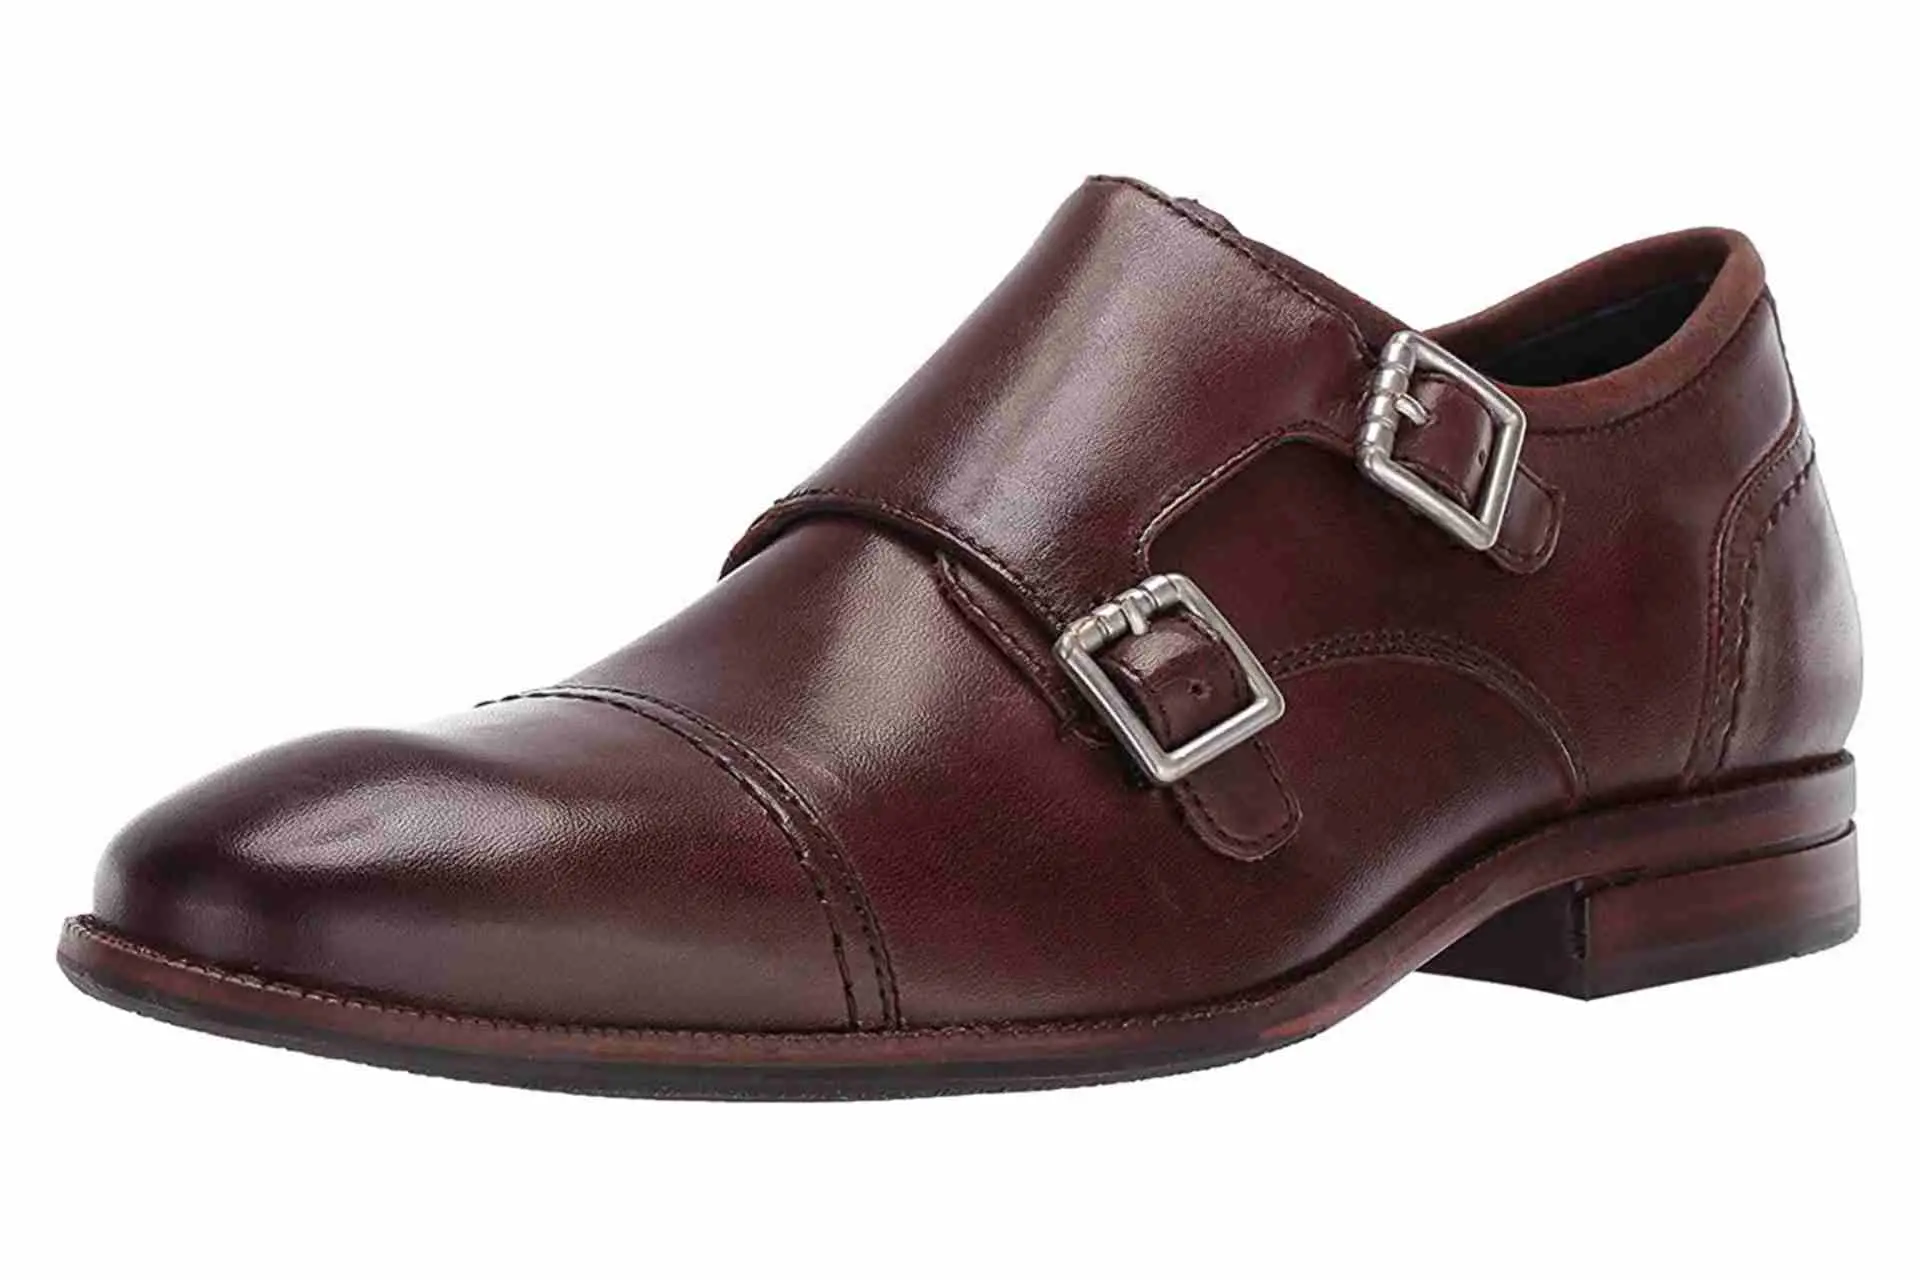 Men's Brown Monk strap shoes